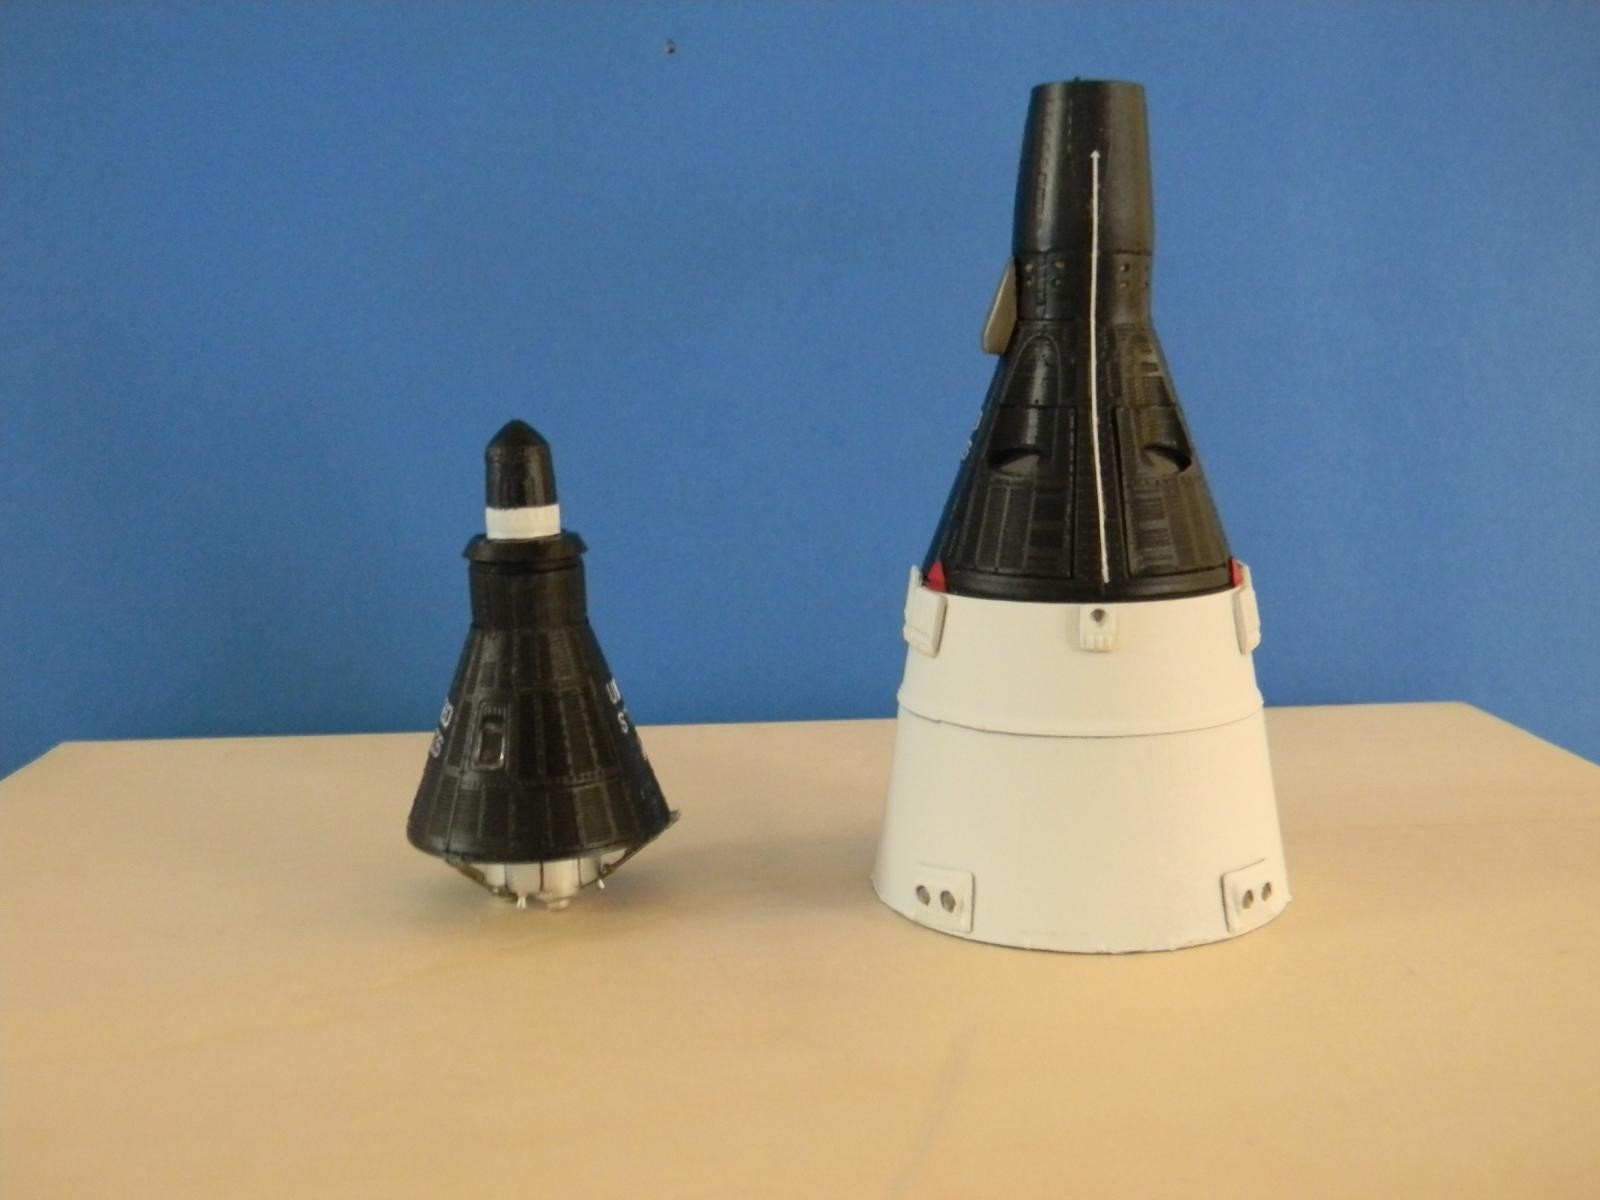 Mercury and Gemini Space capsules 1/48 Revell, reissue - iModeler